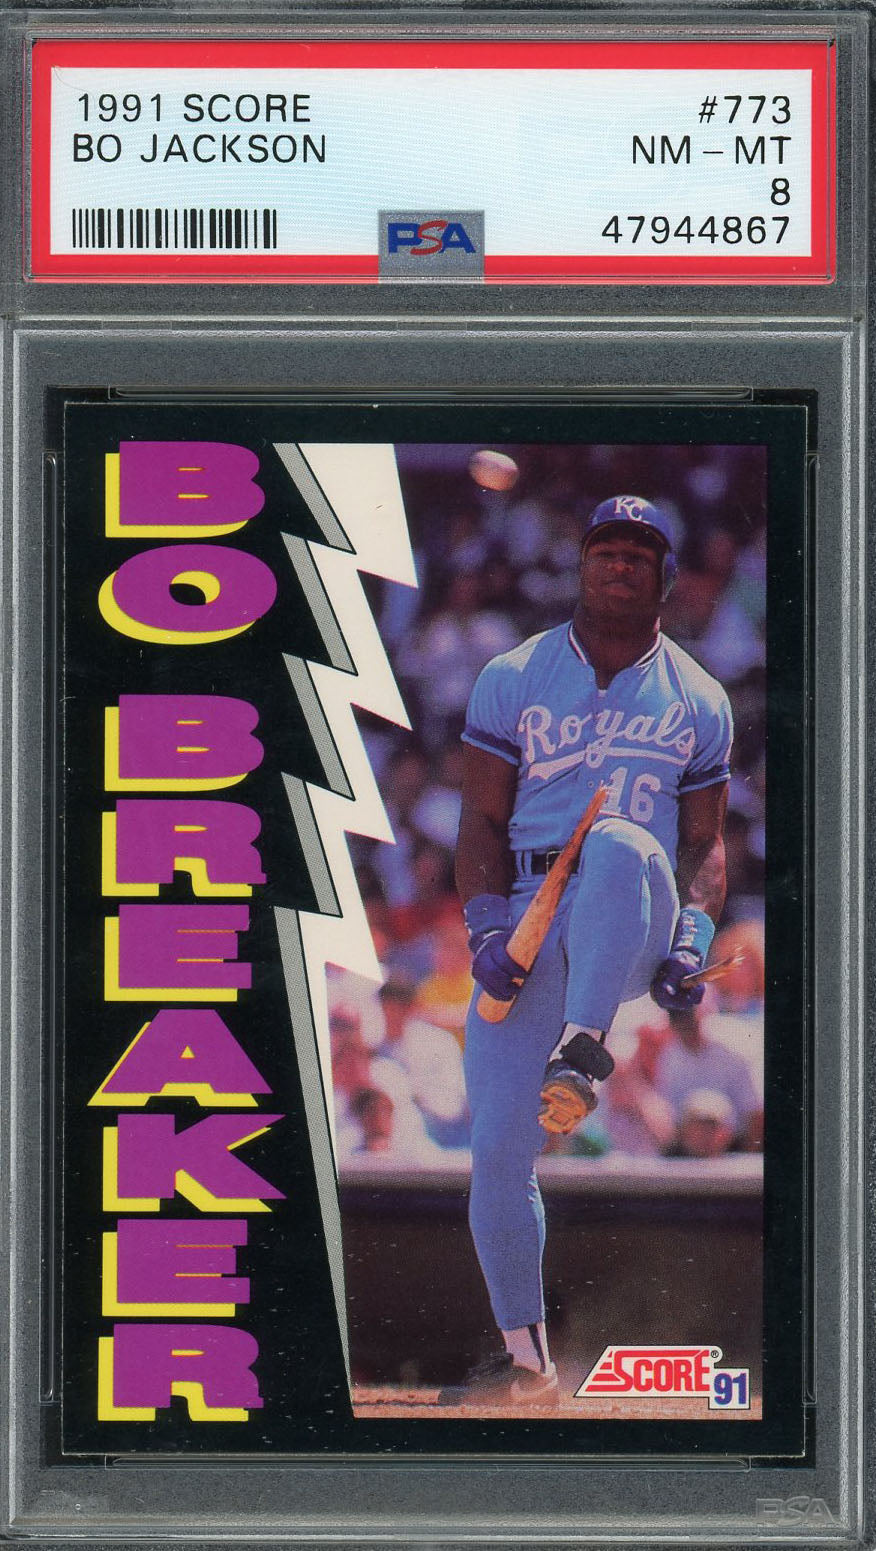 Bo Jackson 1991 Score Bo Breaker Baseball Card #773 Graded PSA 8